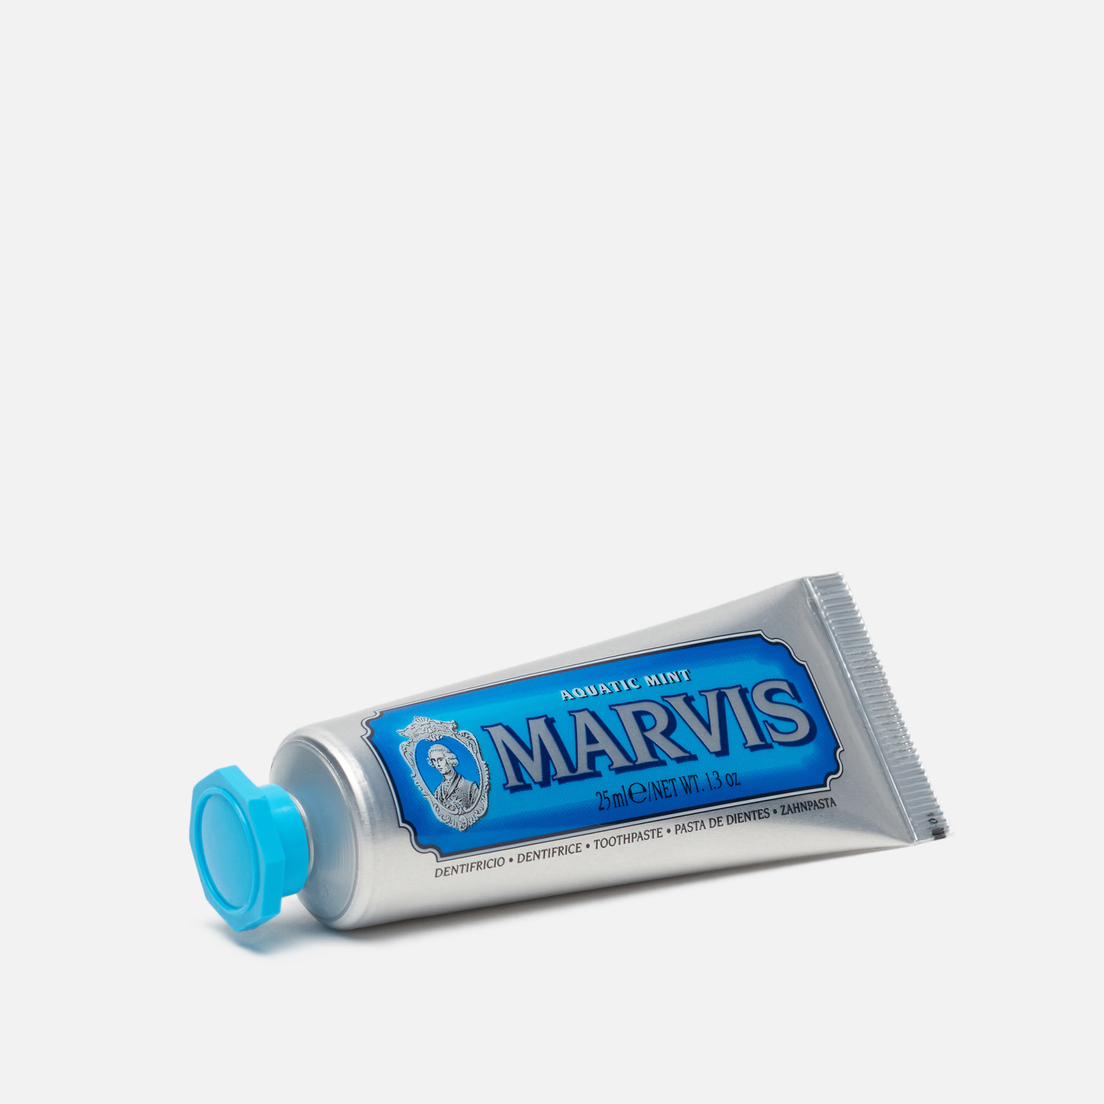 Marvis Зубная паста Aquatic Mint Non Fluor Travel Size